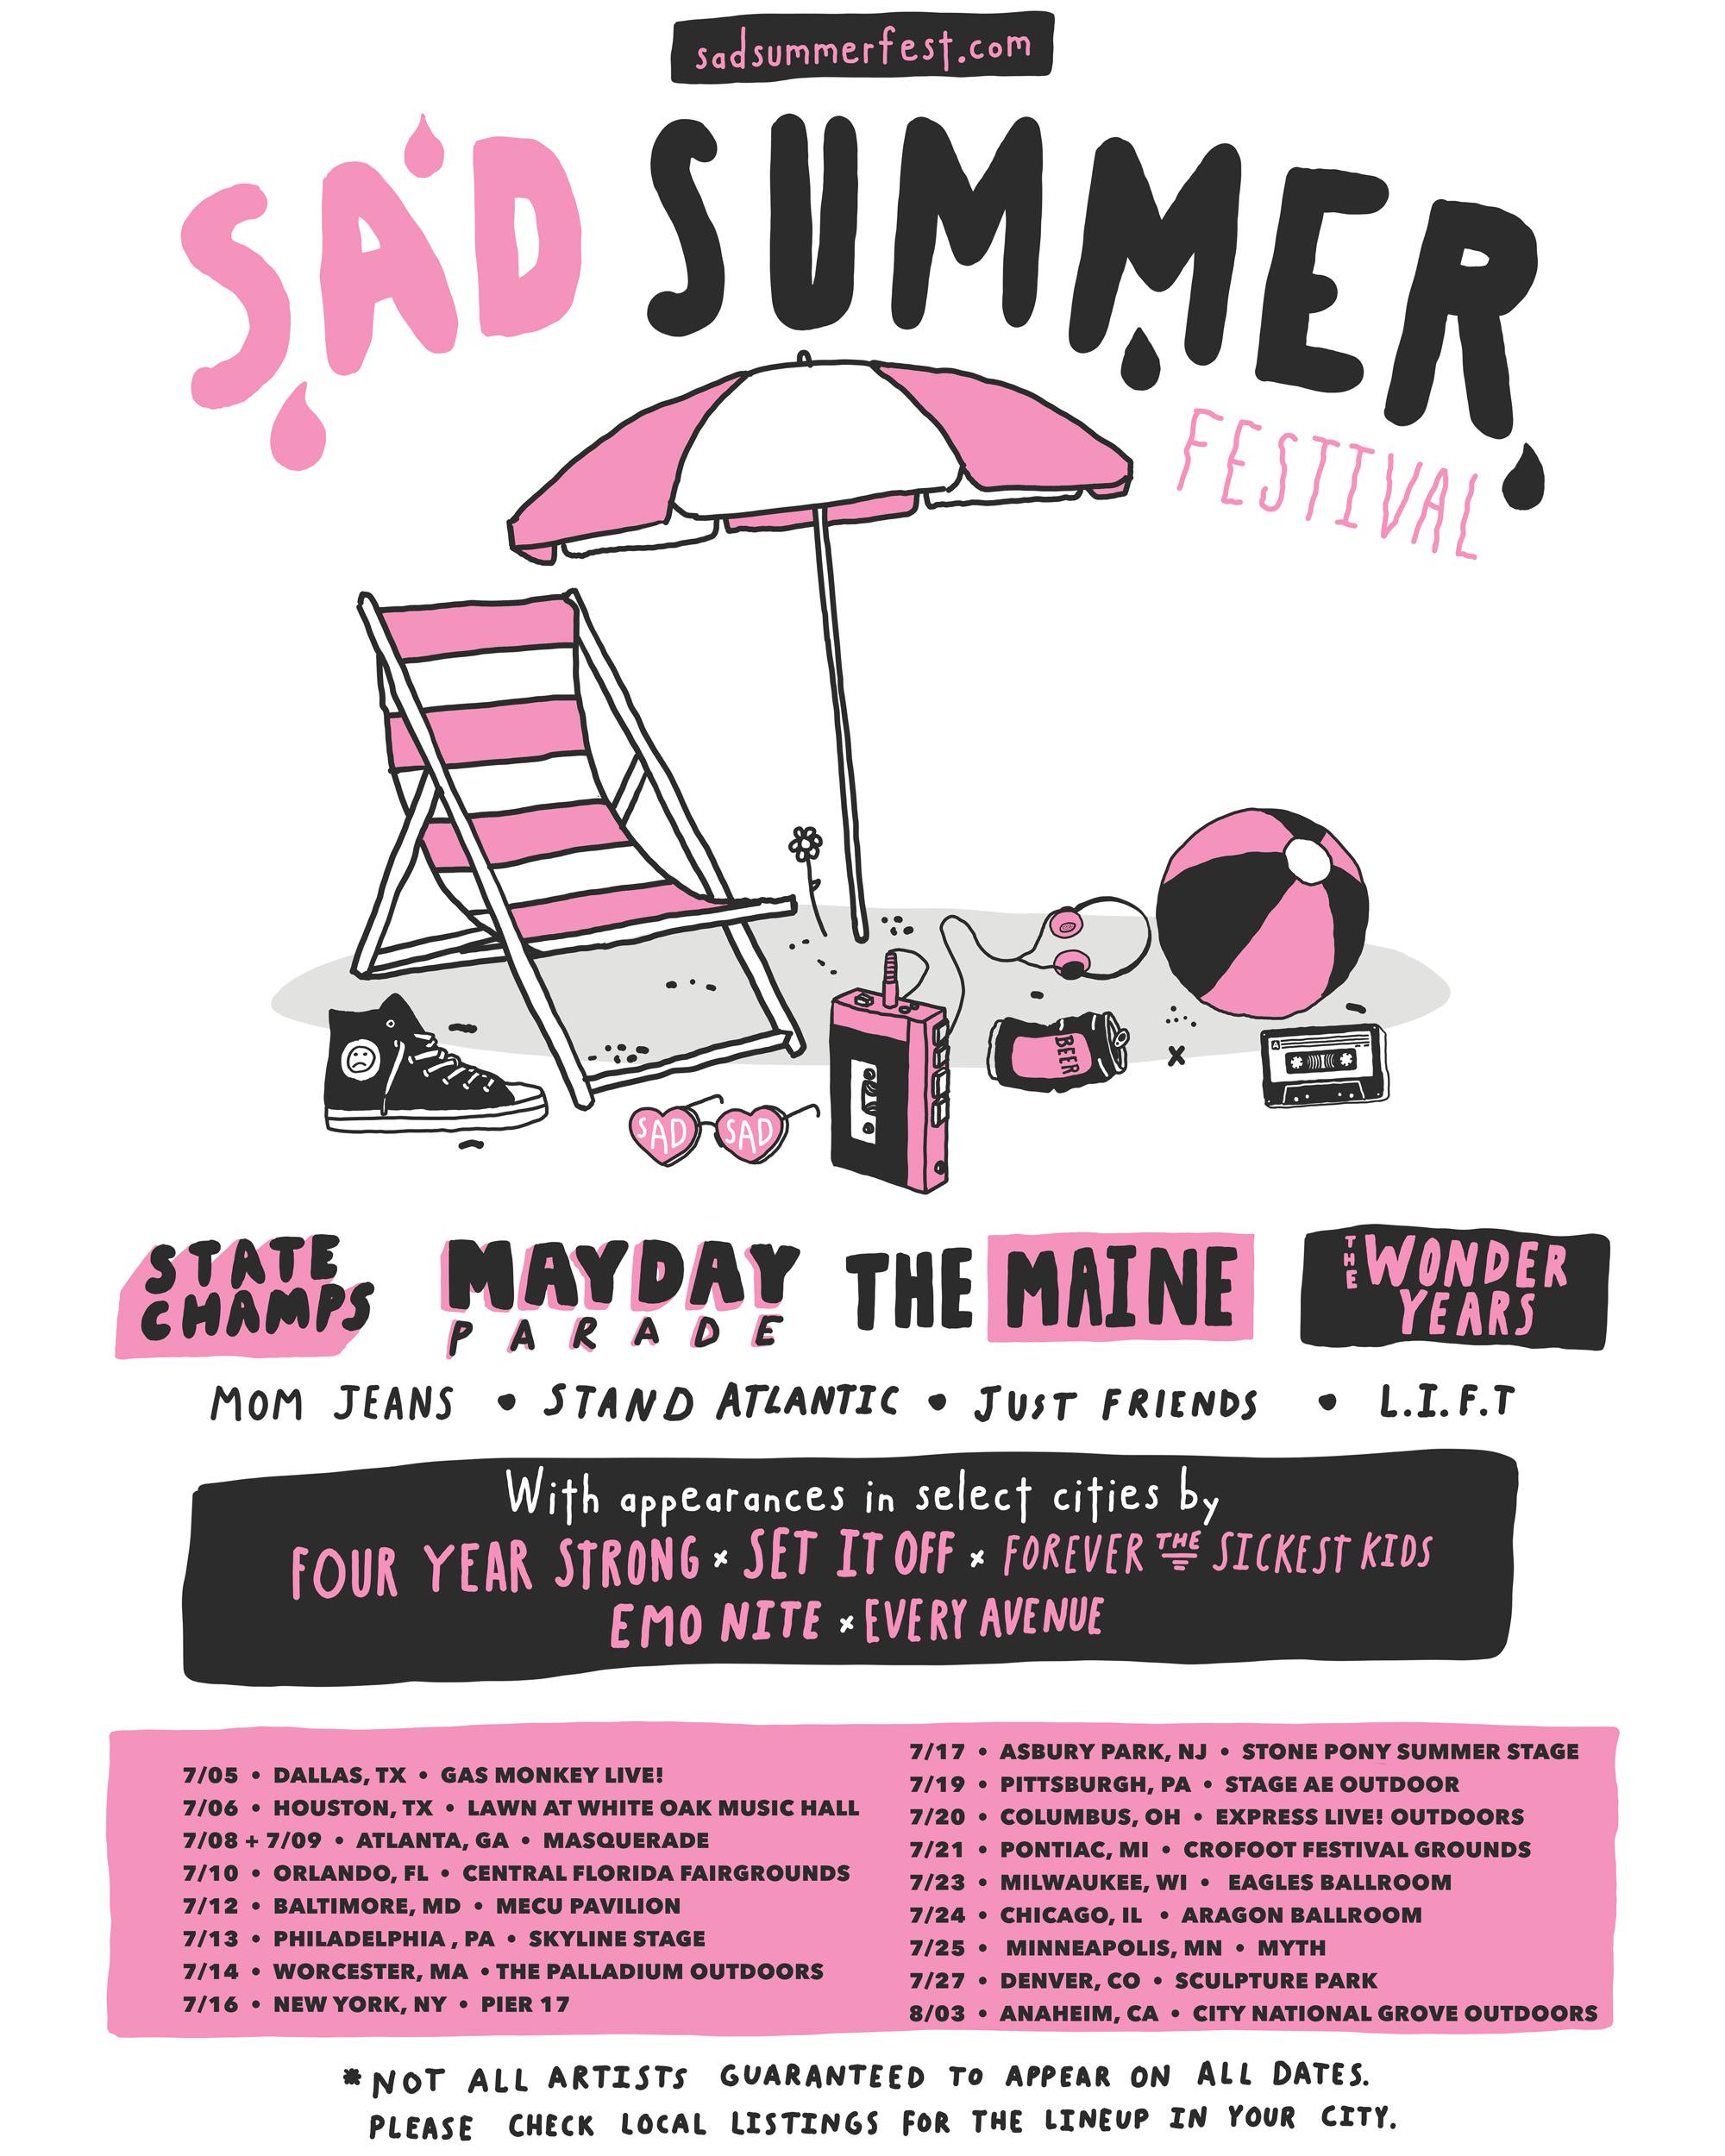 Sad Summer Festival Announced • chorus.fm